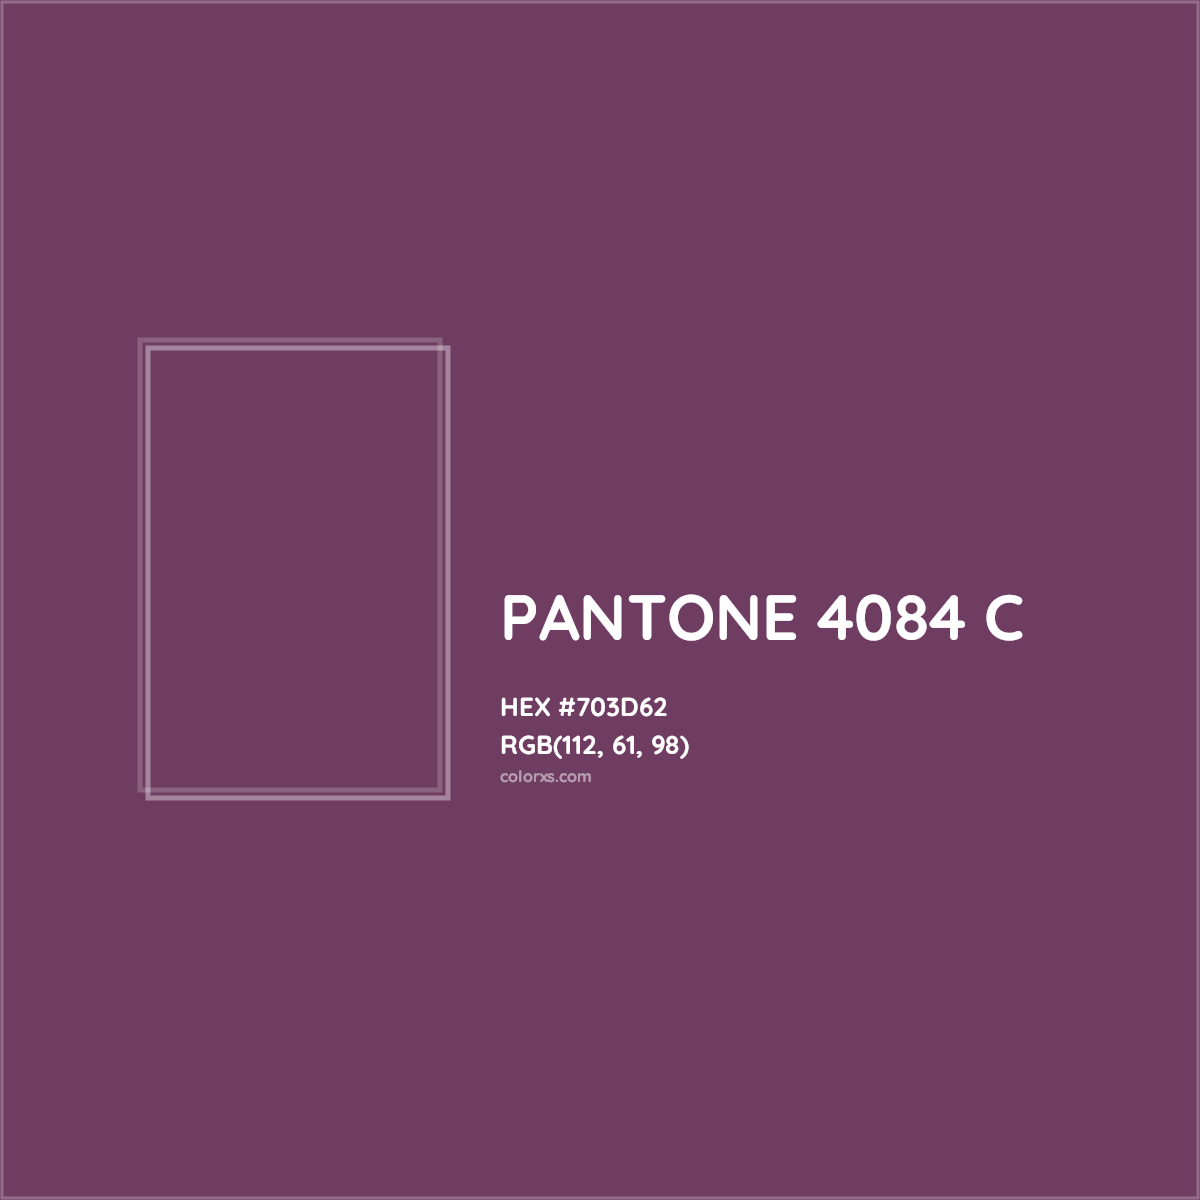 HEX #703D62 PANTONE 4084 C CMS Pantone PMS - Color Code